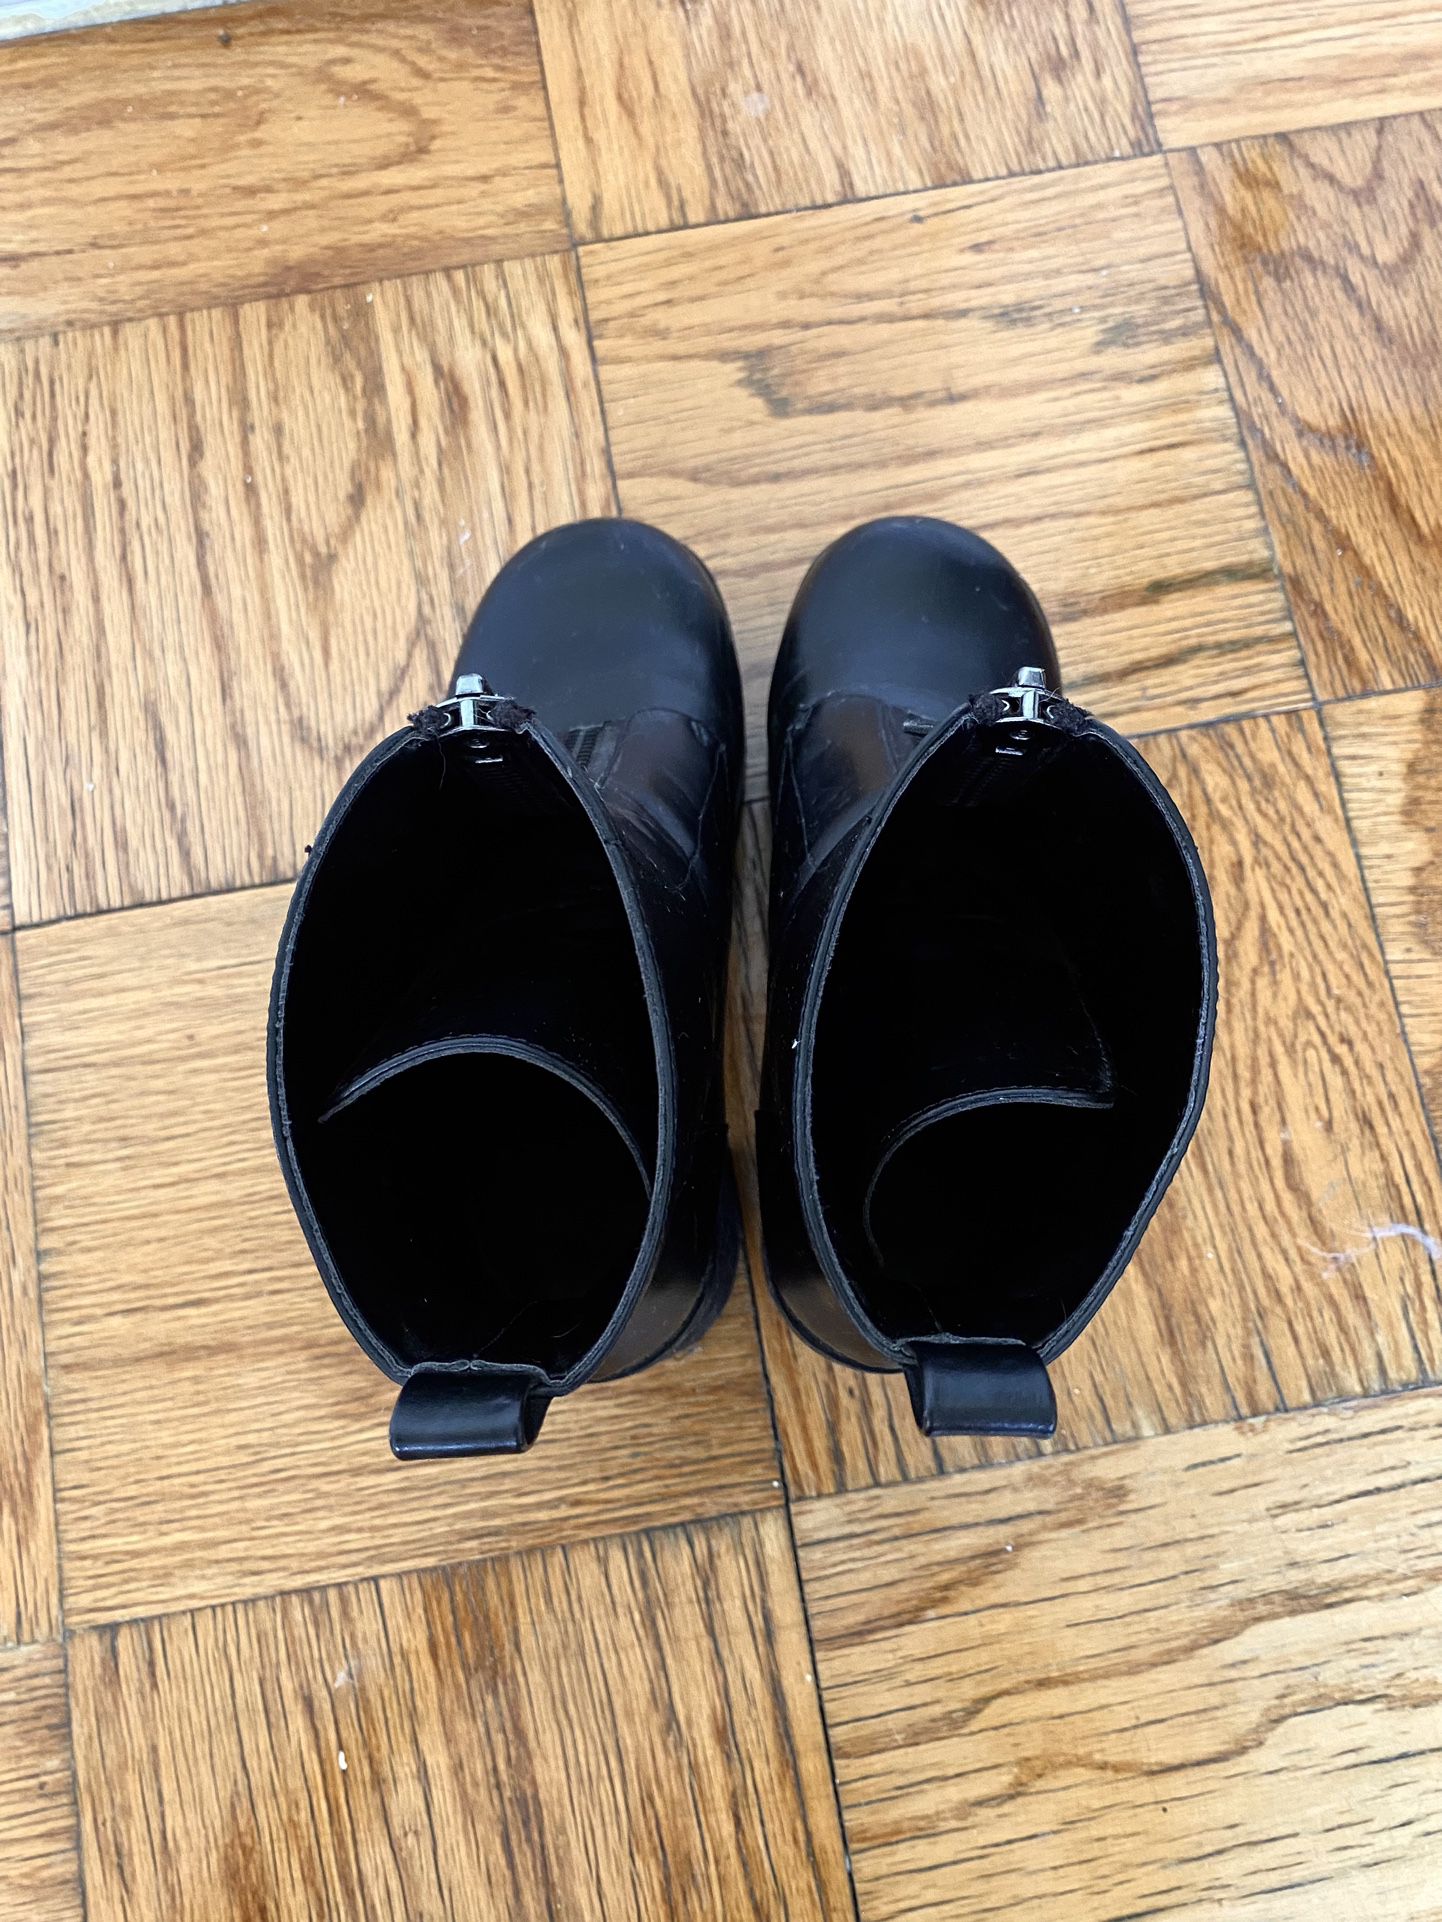 Poster Grl Chunky Block Heel Platform Zip Boots - Size 7, Black